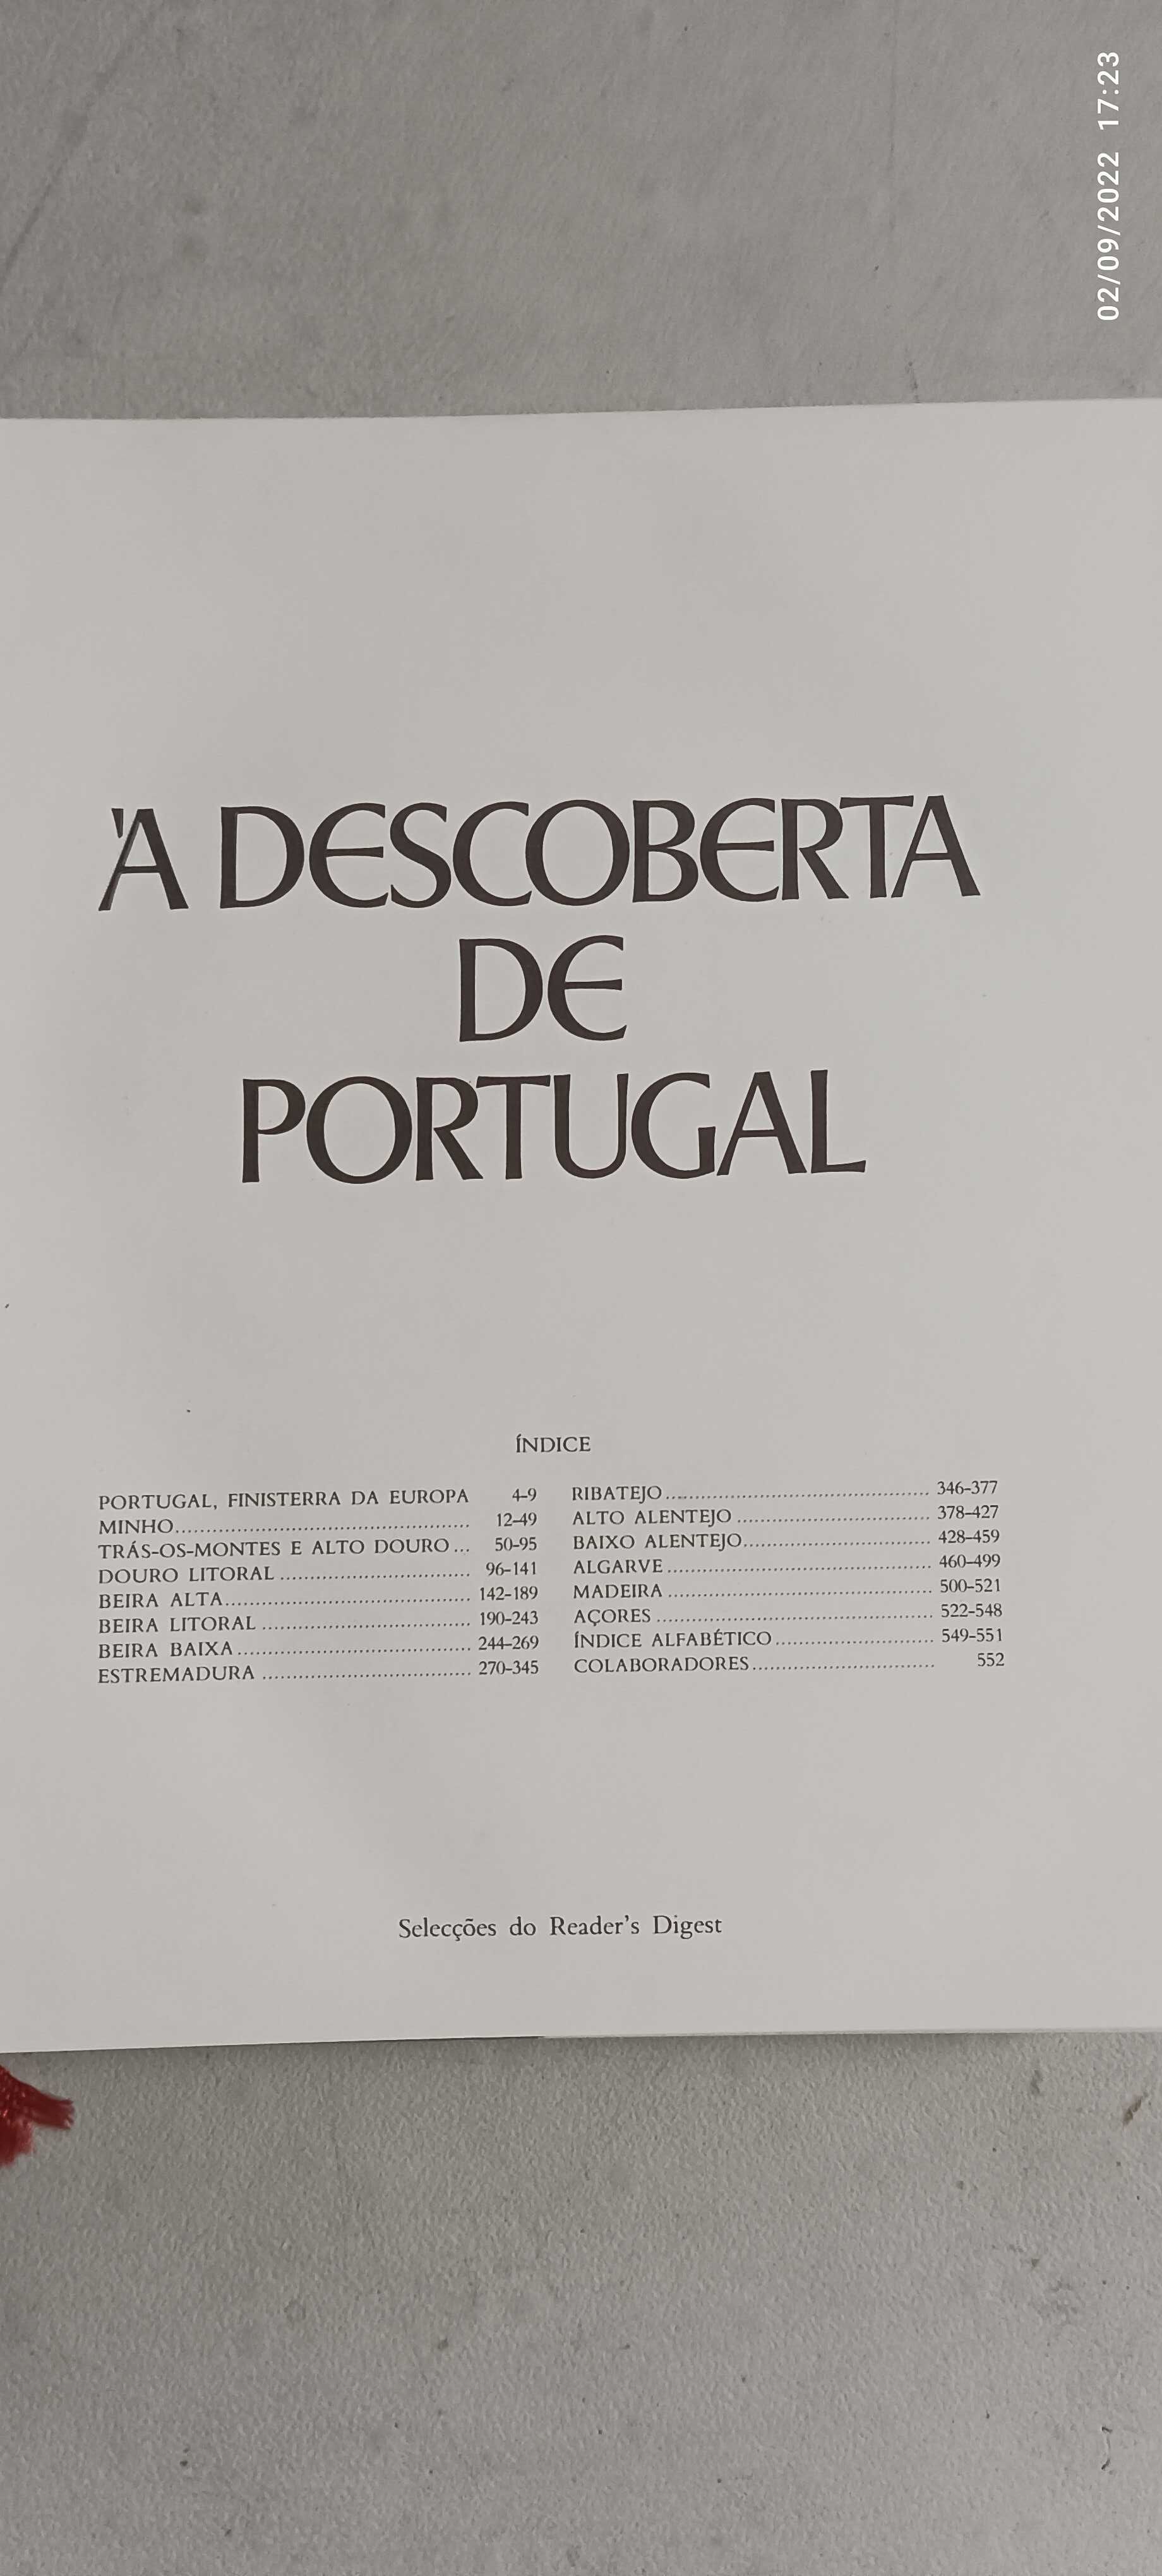 Livro PA-4 -Selecções d Reader"s Digest - A descoberta de Portugal